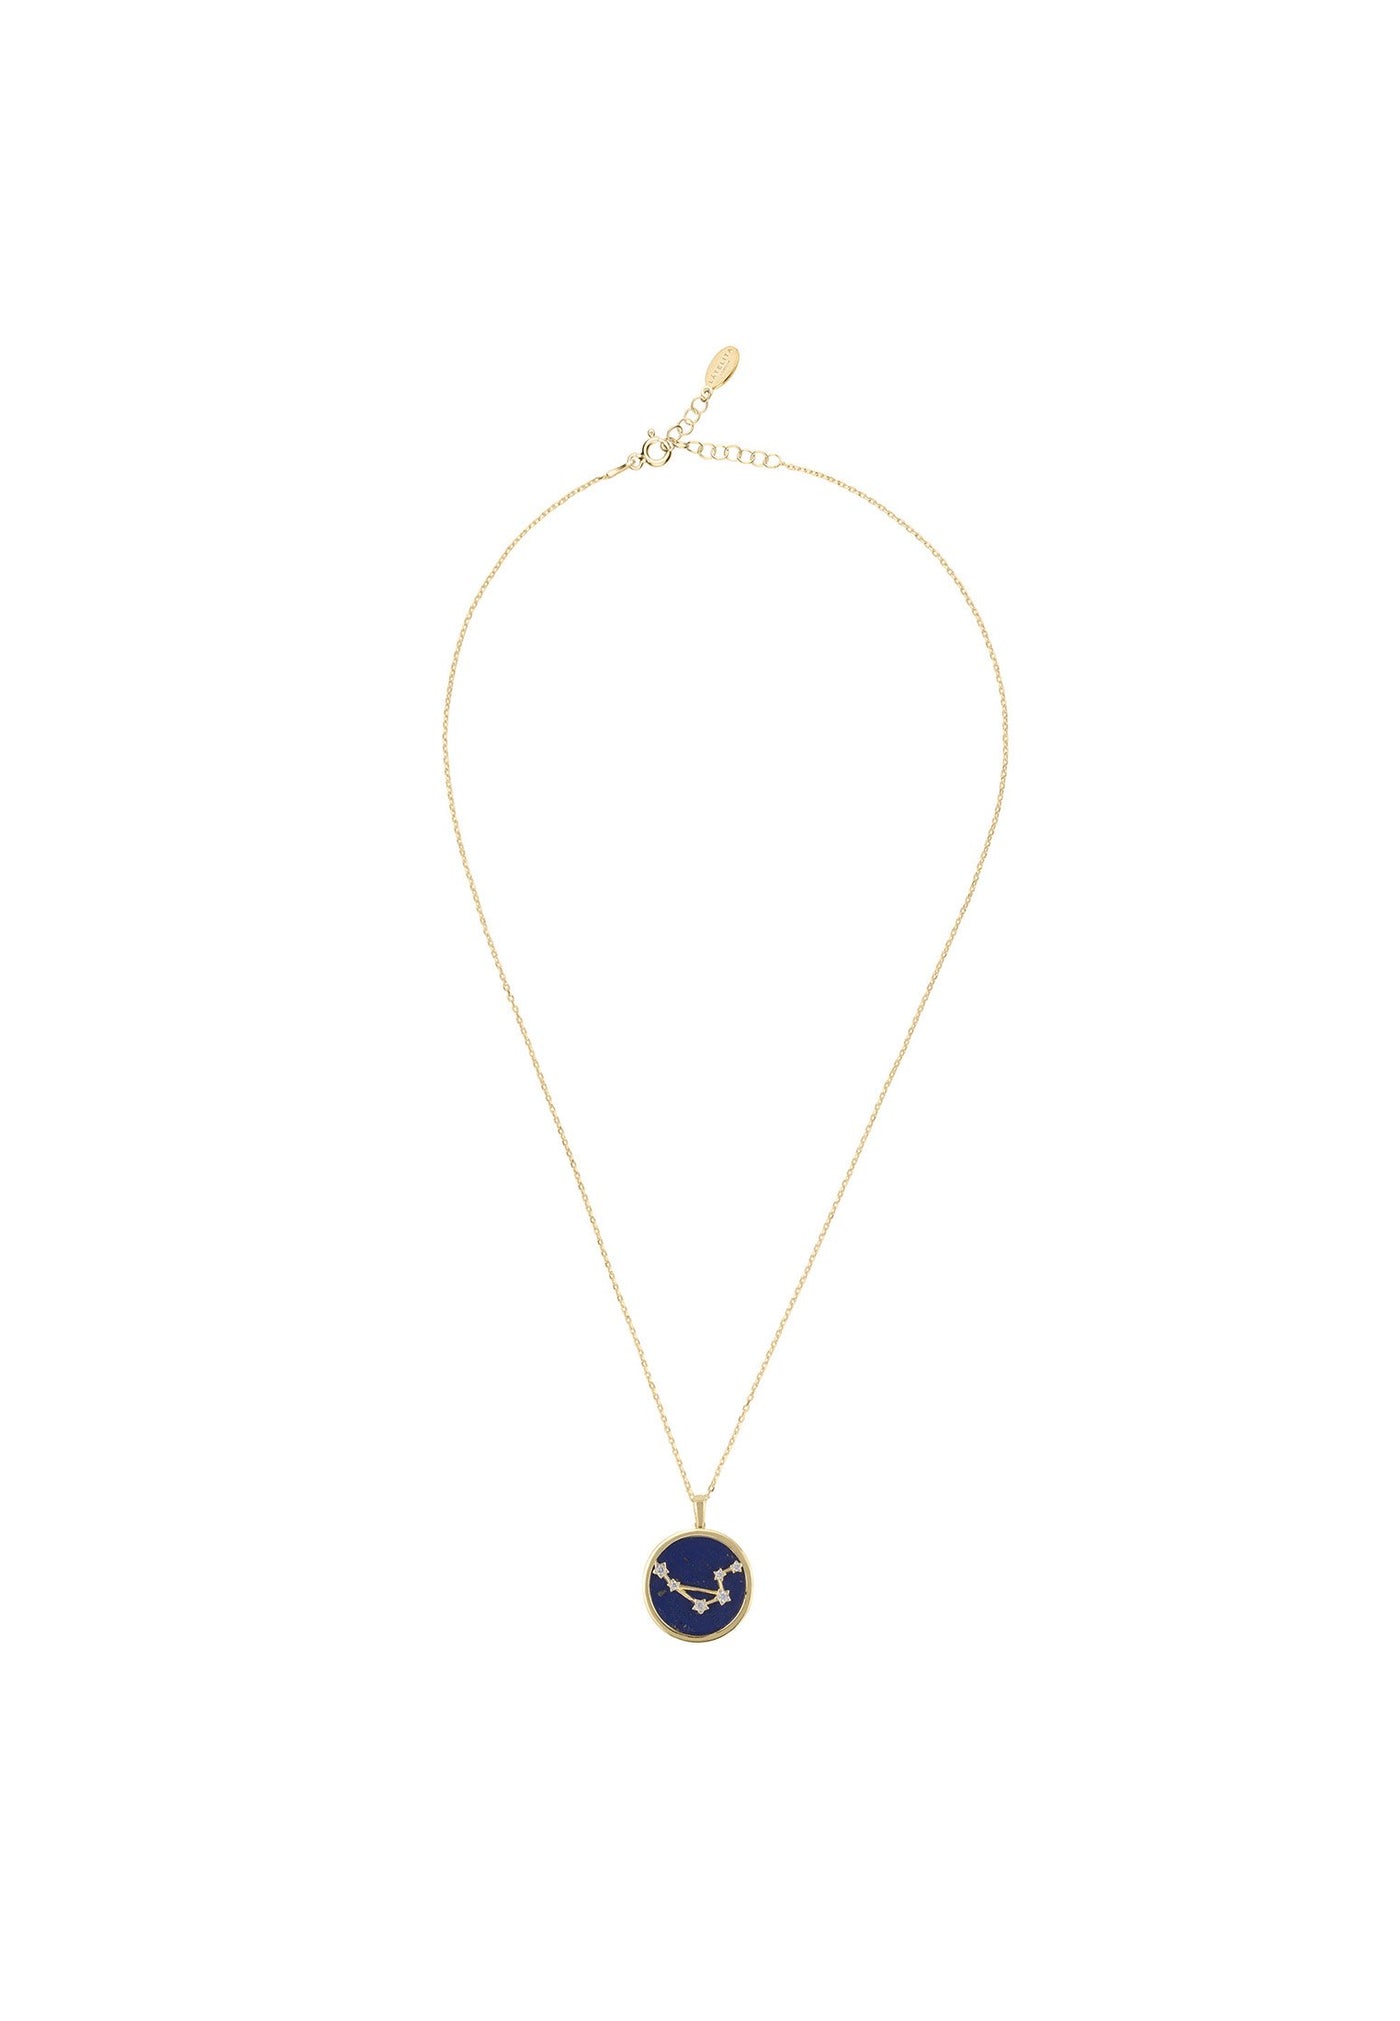 Libra - necklace - 22 carat gold plated - lapis lazuli with white zirconia